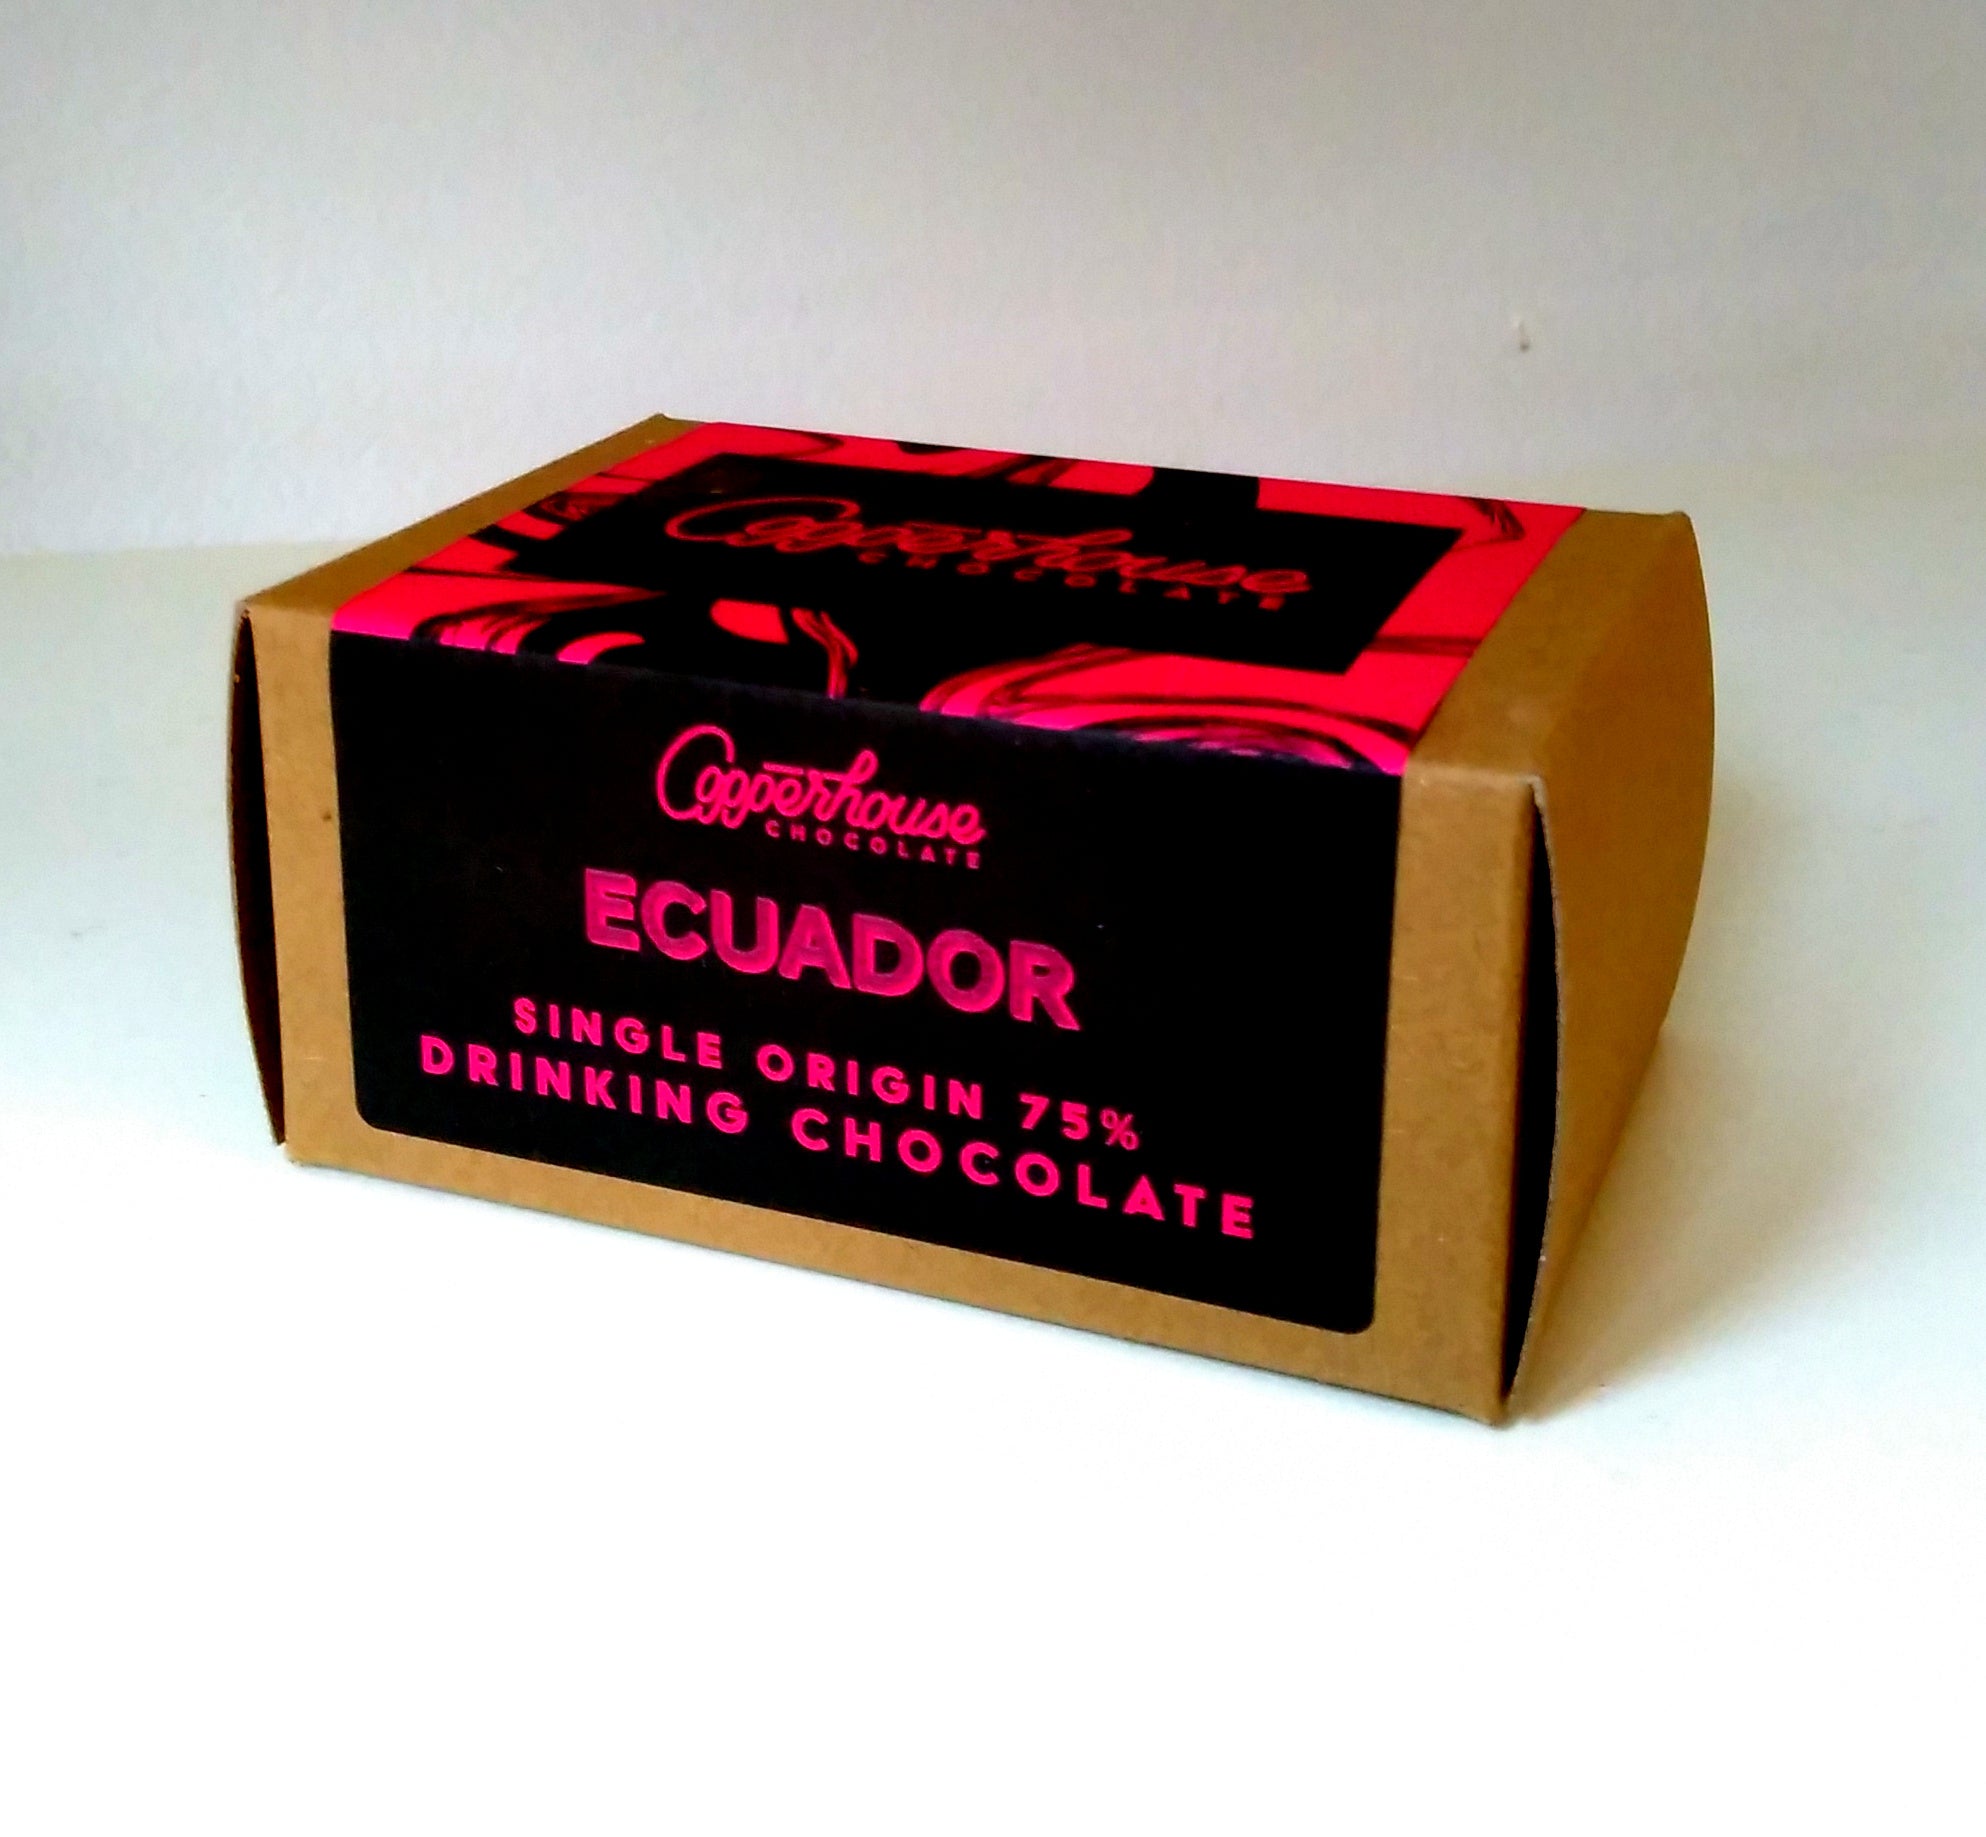 Ecuador 75% single-origin hot chocolate